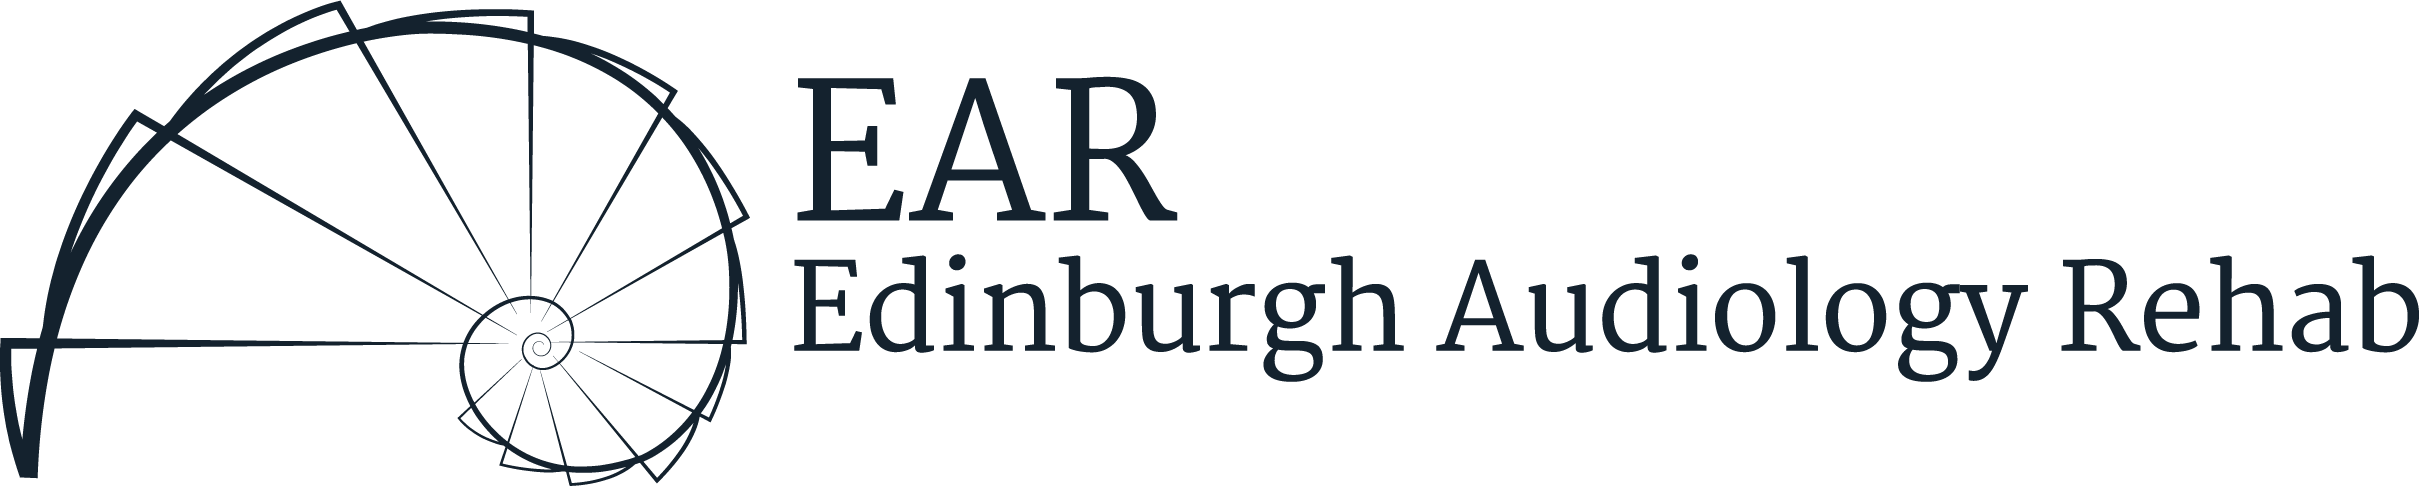 Edinburgh Audiology Rehab EAR